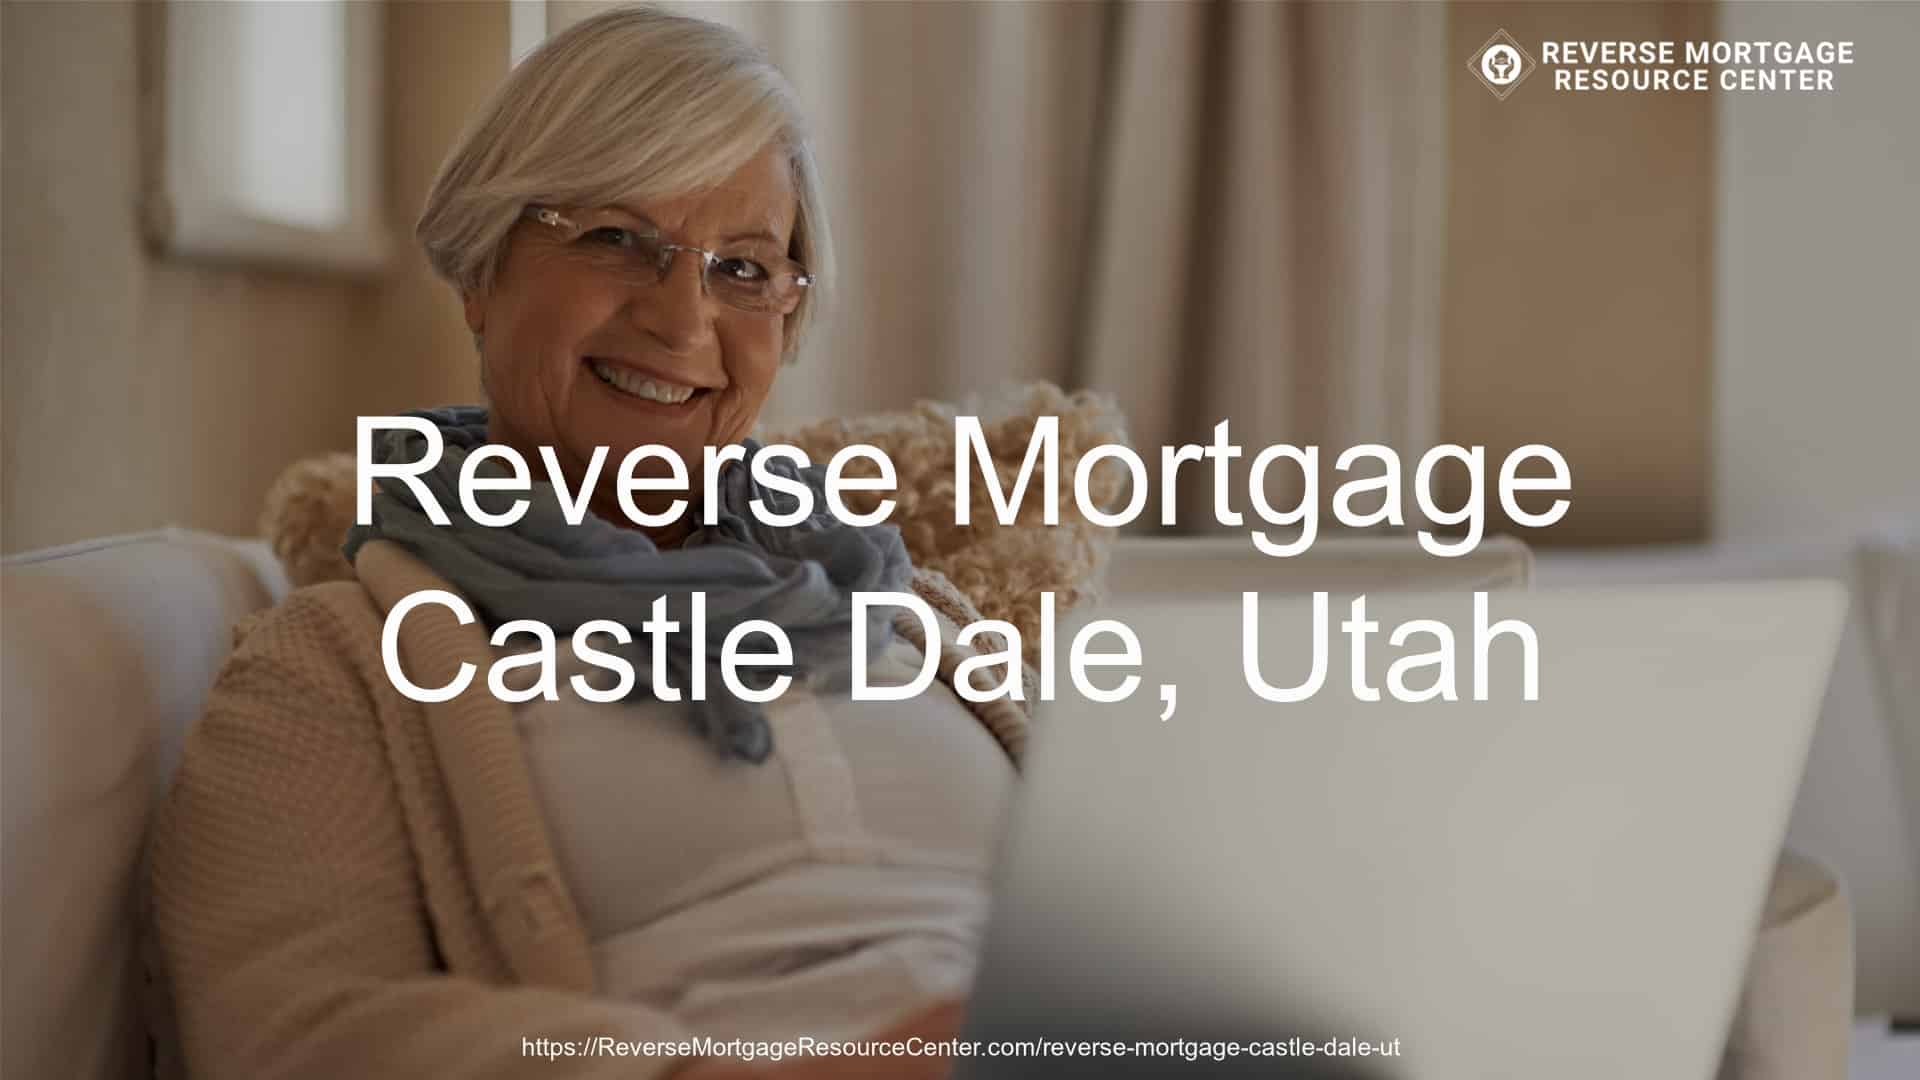 Reverse Mortgage Loans in Castle Dale Utah